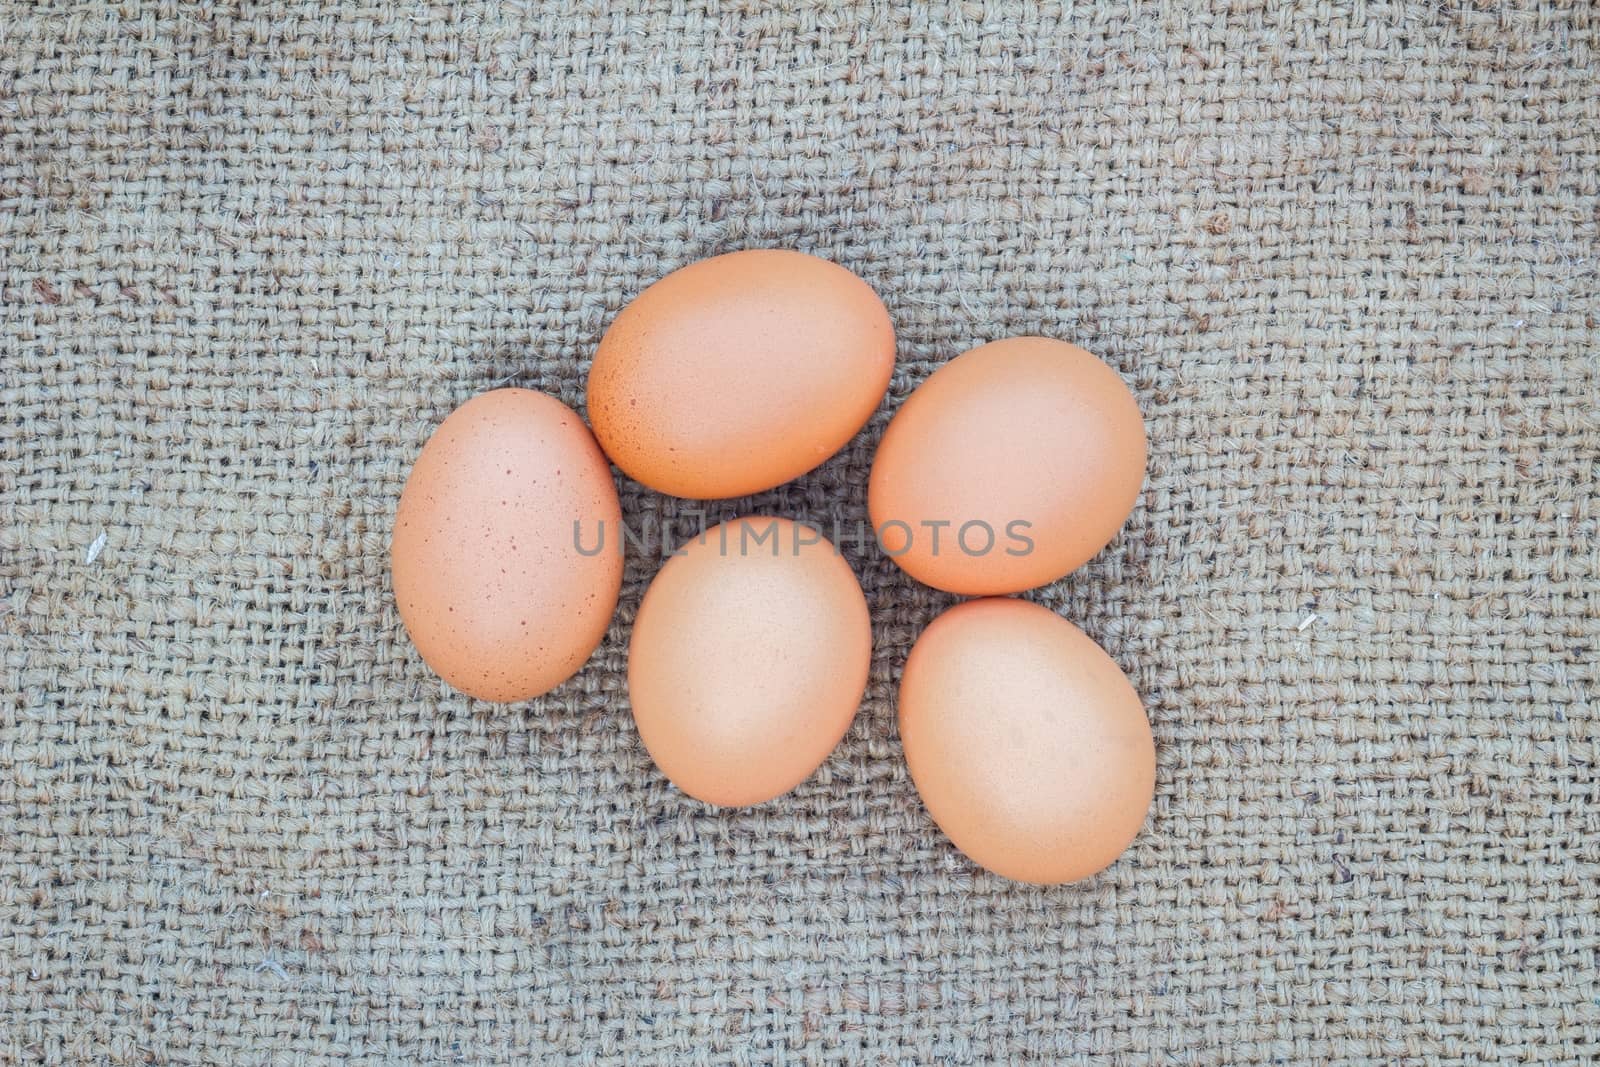  eggs on gunnysack  by a3701027